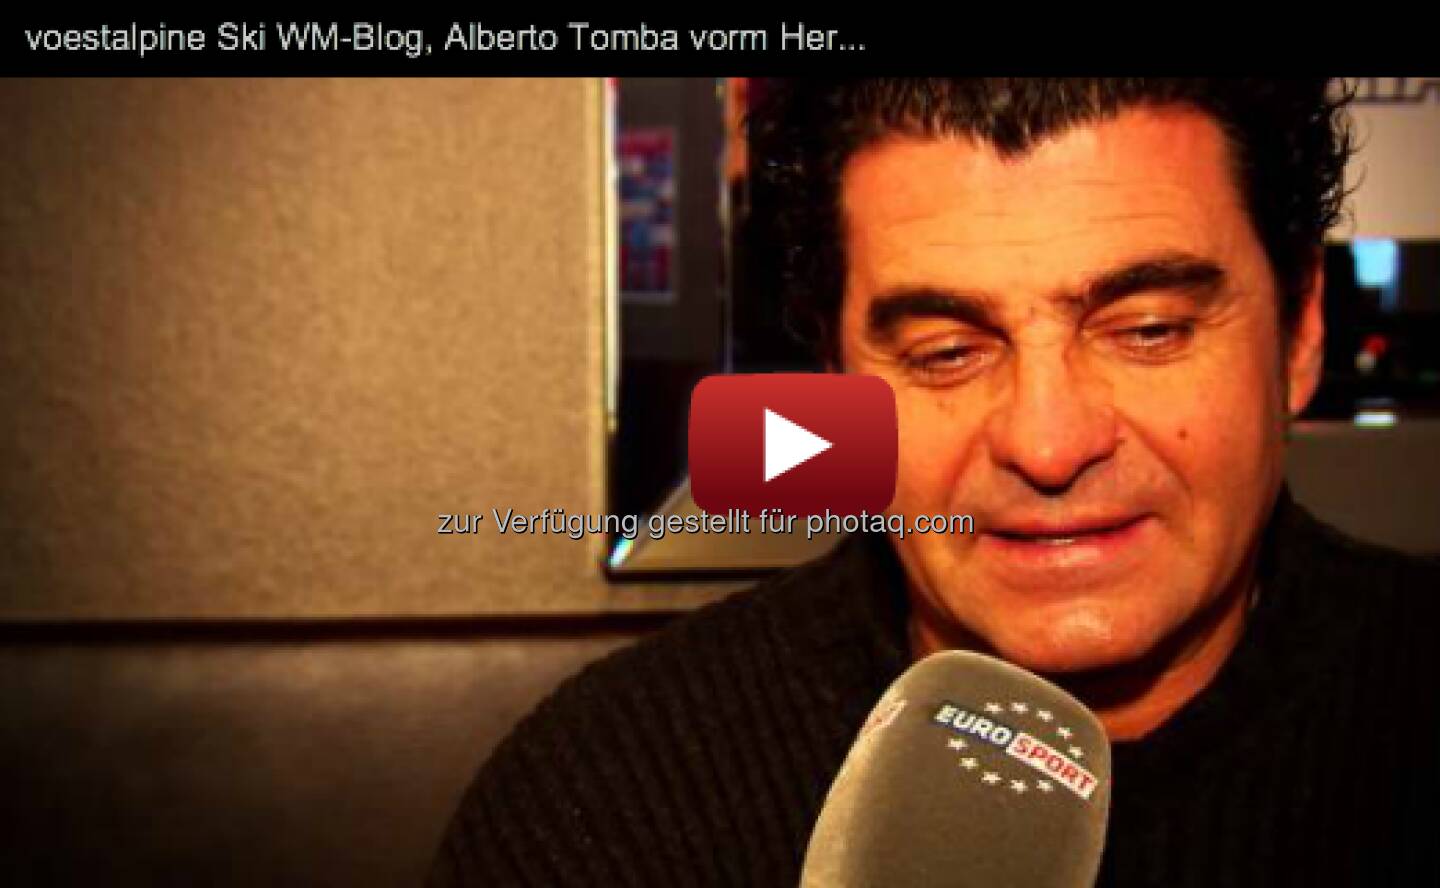 Im Talk mit Alberto Tomba (la Bomba) http://voestalpine-wm-blog.at/2013/02/17/tomba-la-bomba/#.USDBzo7aK_Q